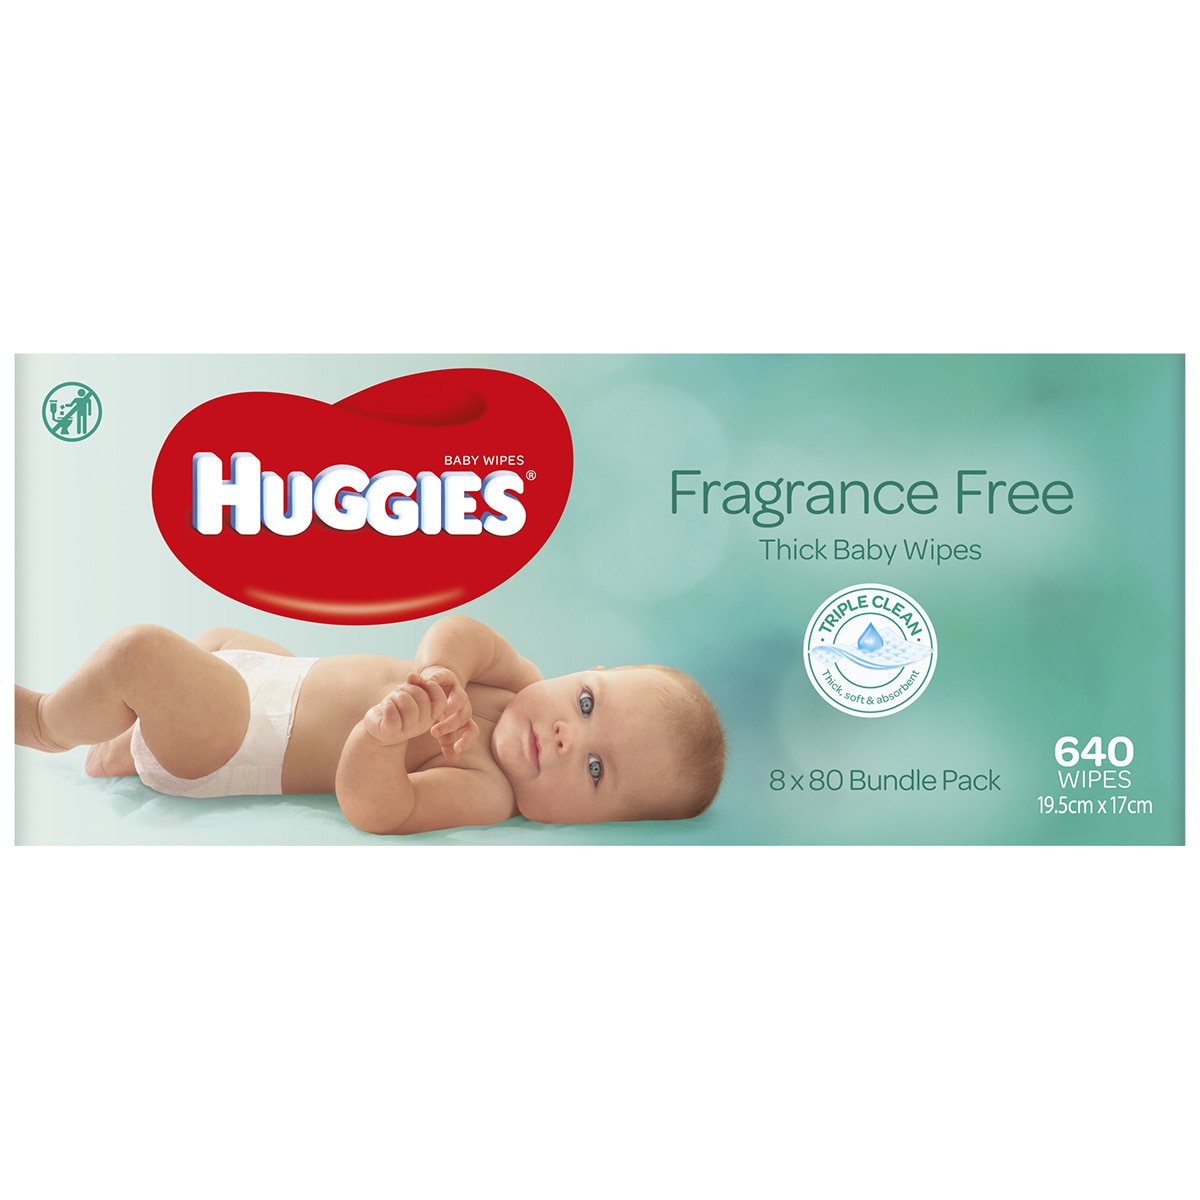 Huggies Baby Wipes Fragrance Free 8 x 80 Bundle Pack | Co...